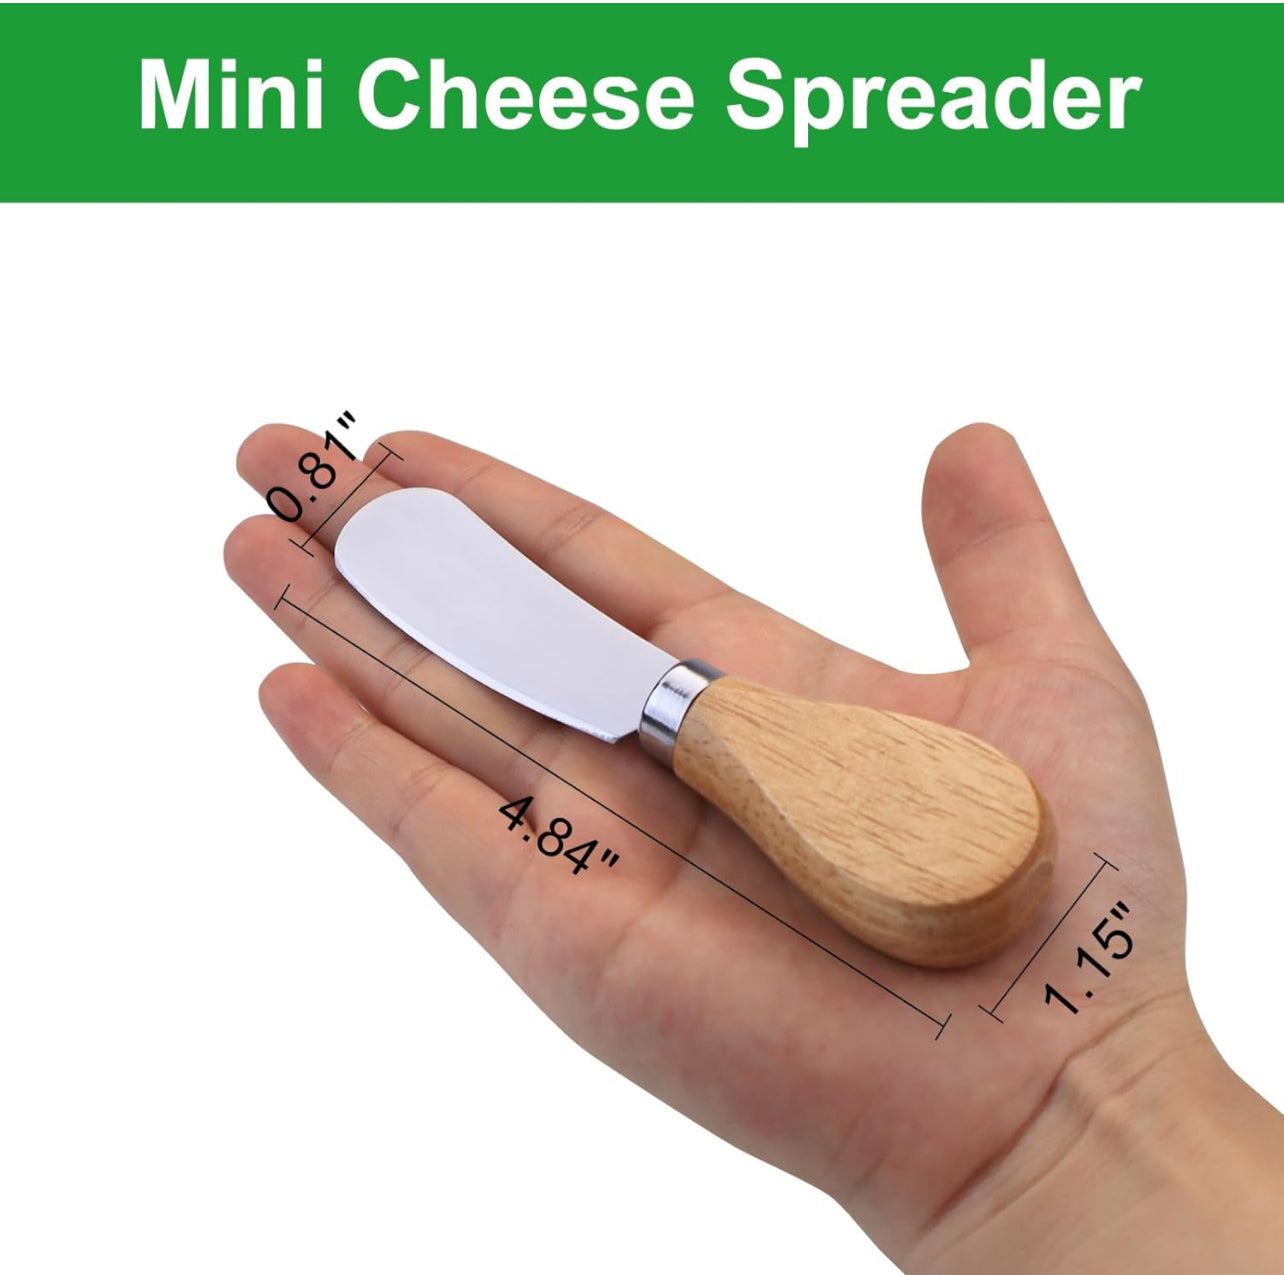 Cheese spreader